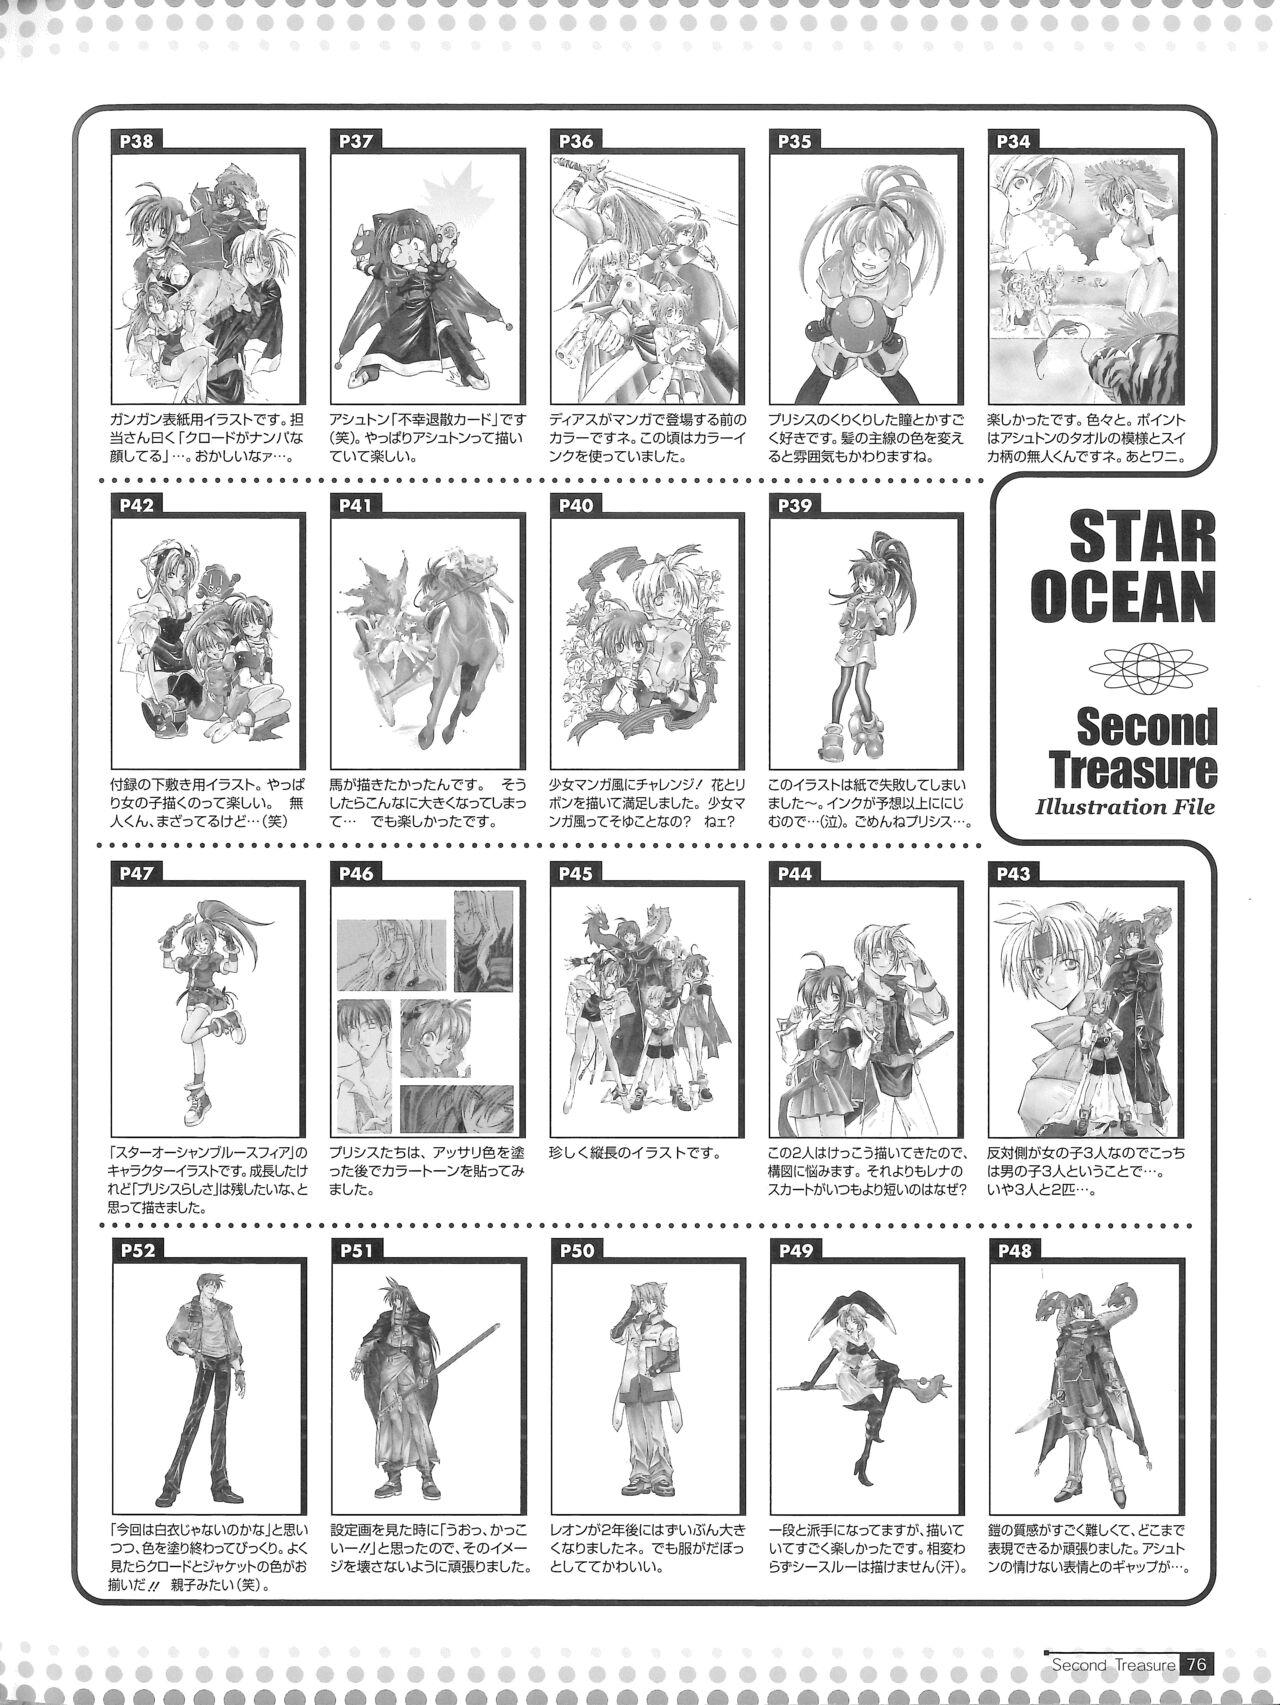 Star Ocean Second Treasure 83